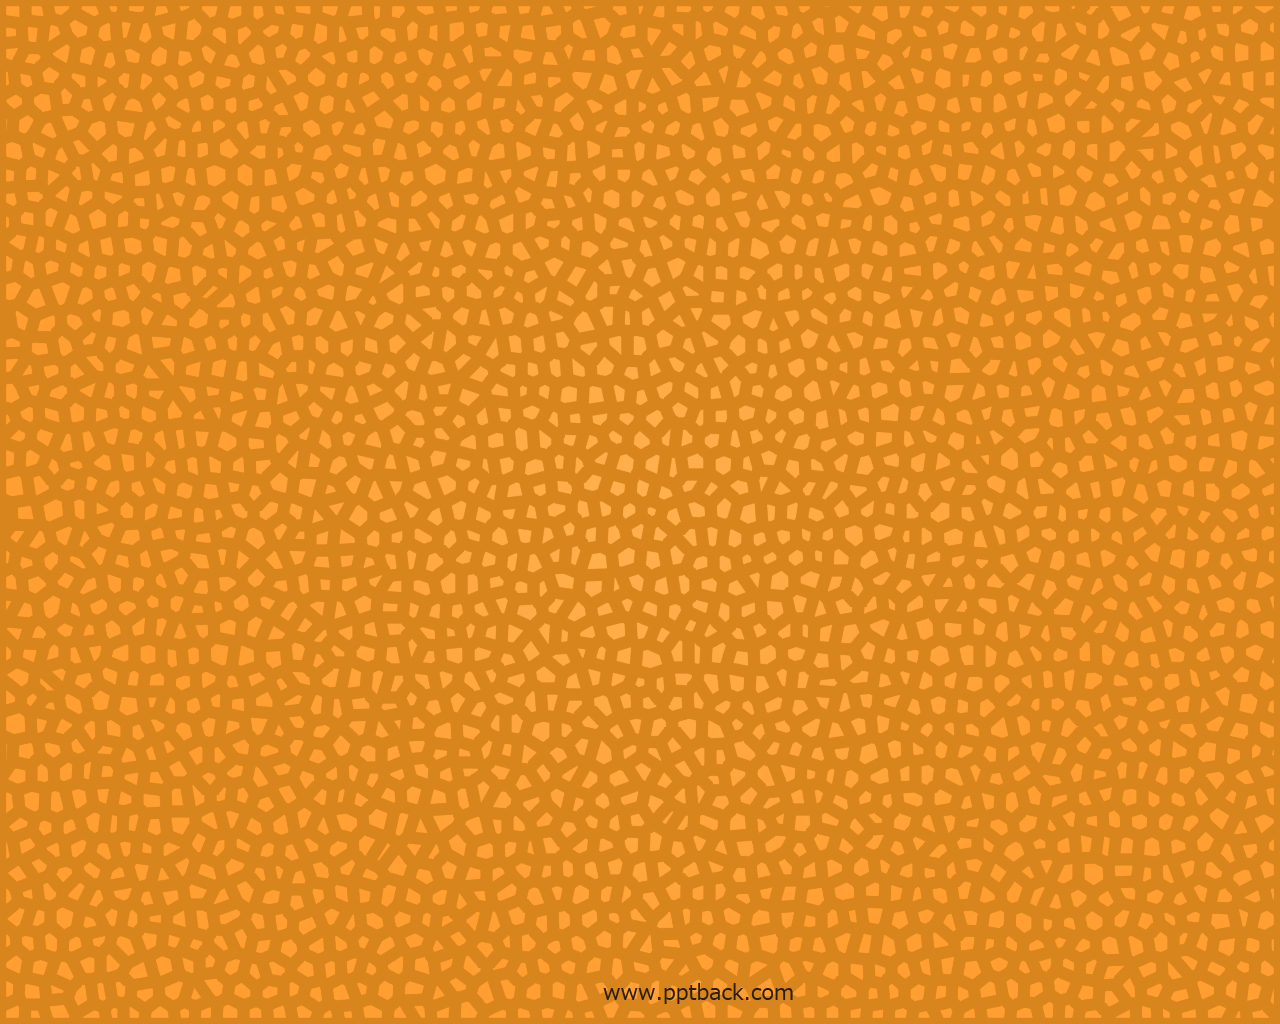 Orange Particles backgrounds